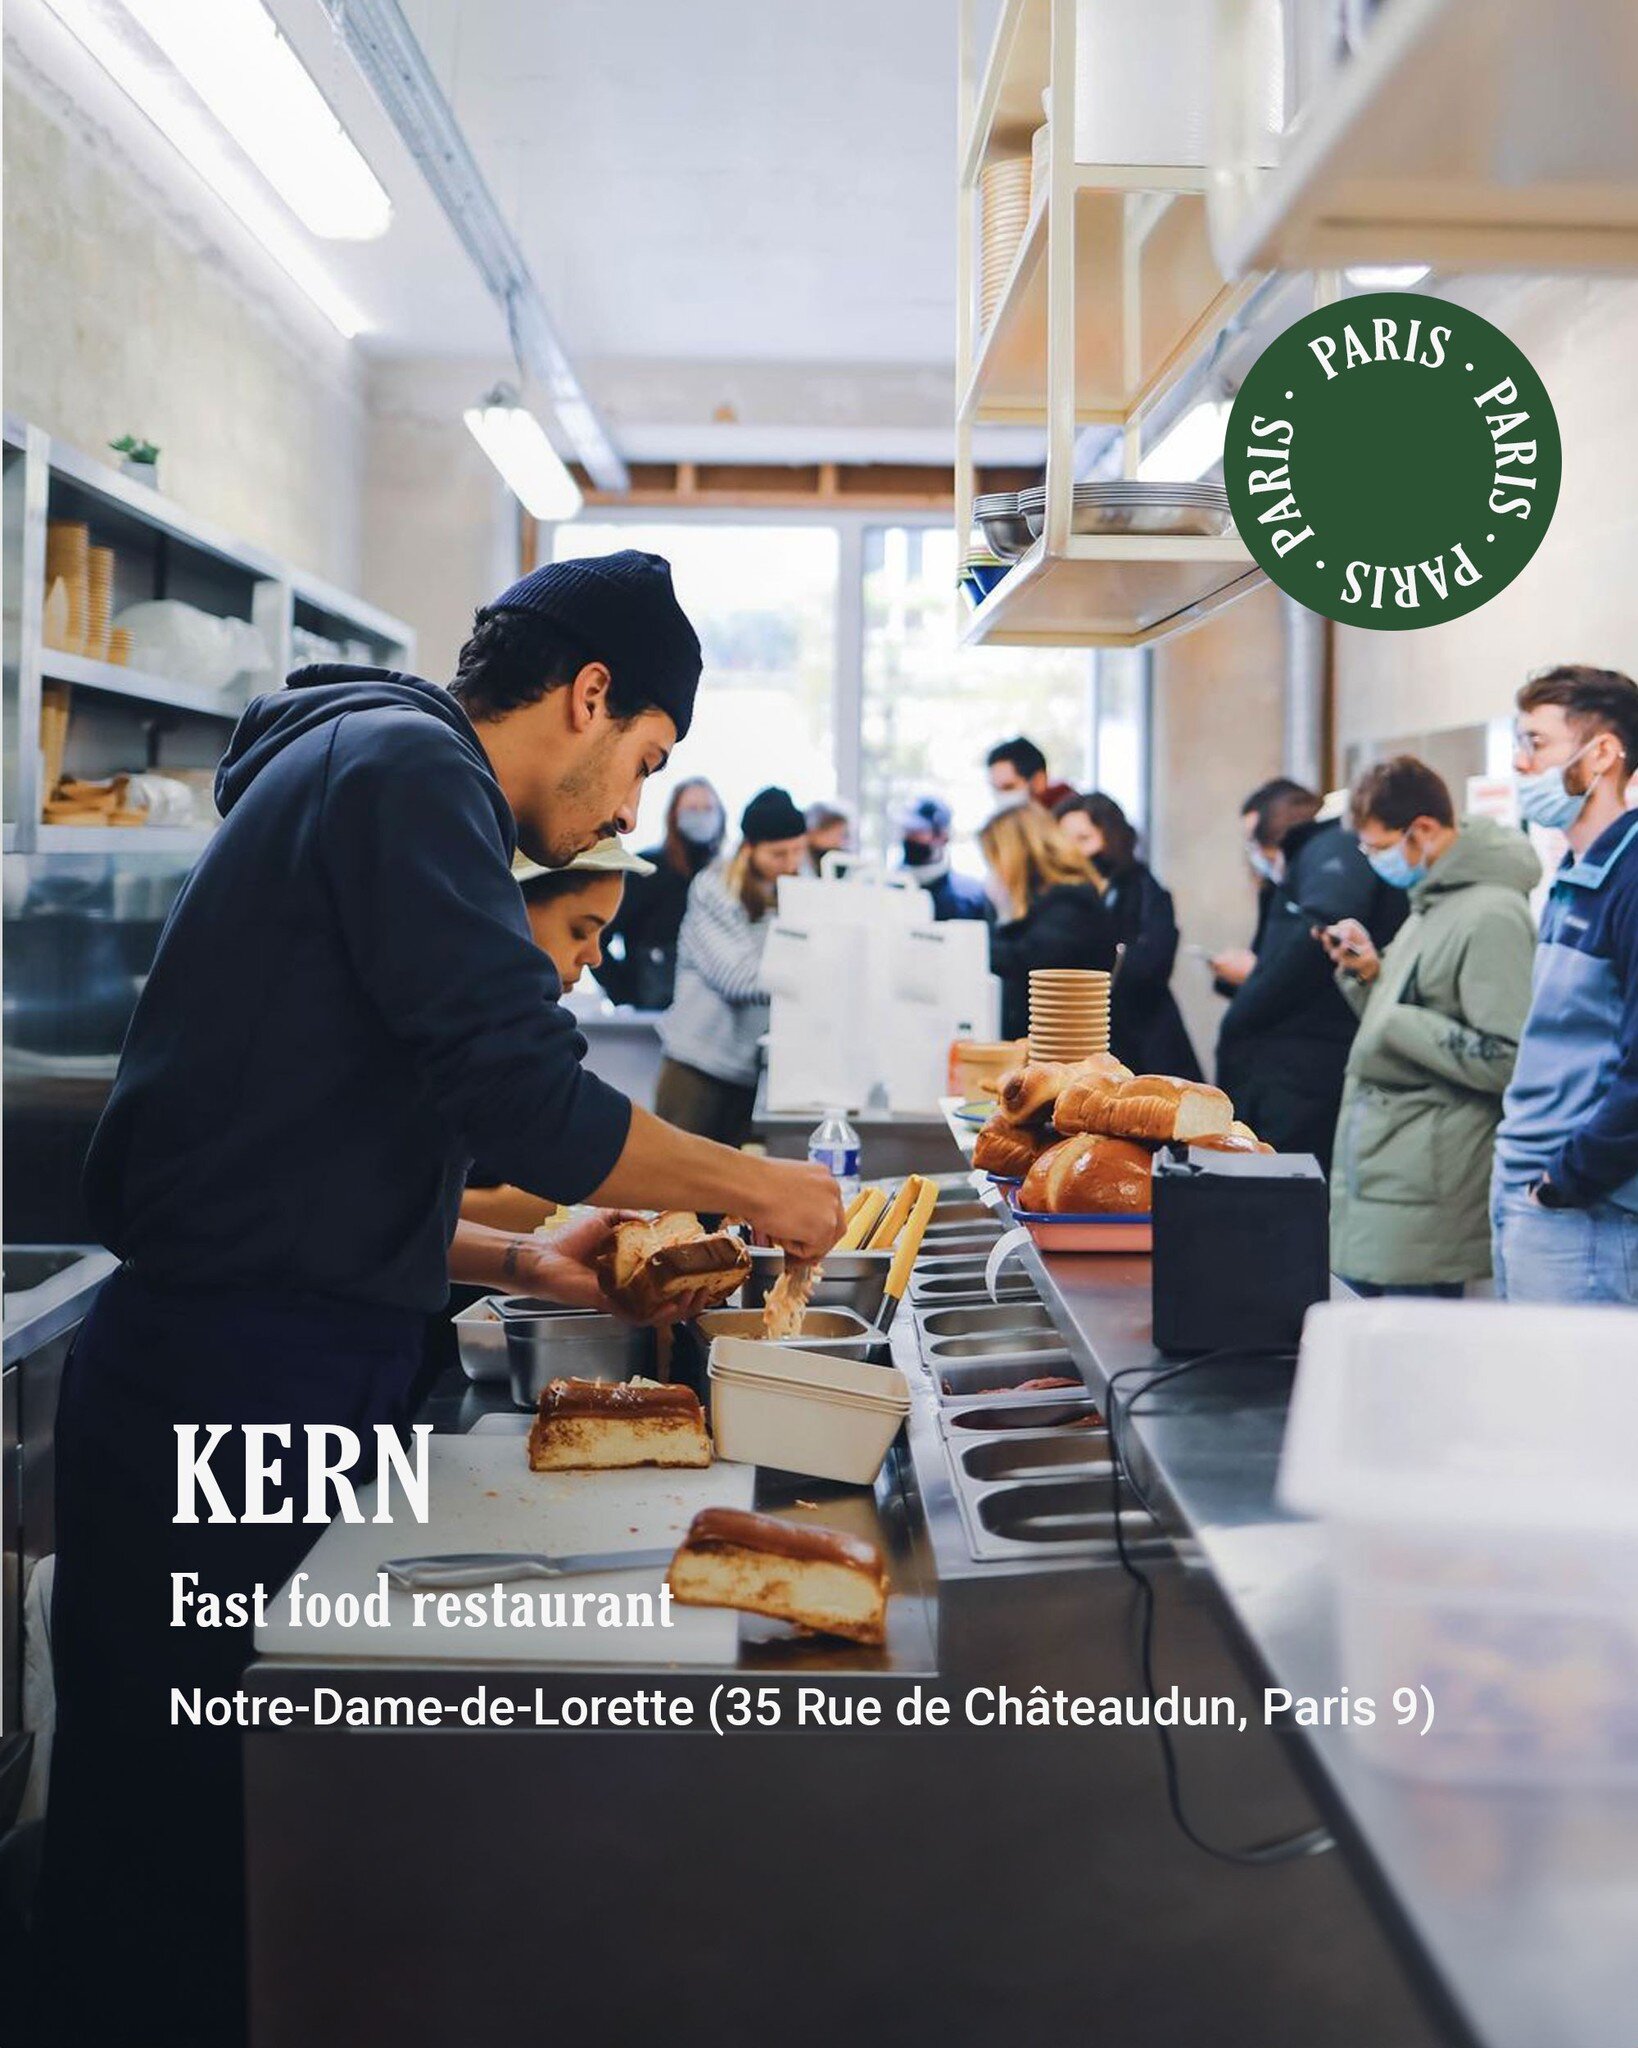 Check out the latest additions to our NYC and Paris guides! 😎🔥

PARIS
@kernparis: Sandwich Shop
@pouliche.paris: Restaurant
@linapercuparis: Restaurant &amp; bookshop
@bambino_paris: Tapas bar 

NEW YORK CITY
@ntmvsmmxix: Coffee shop &amp; nightclu